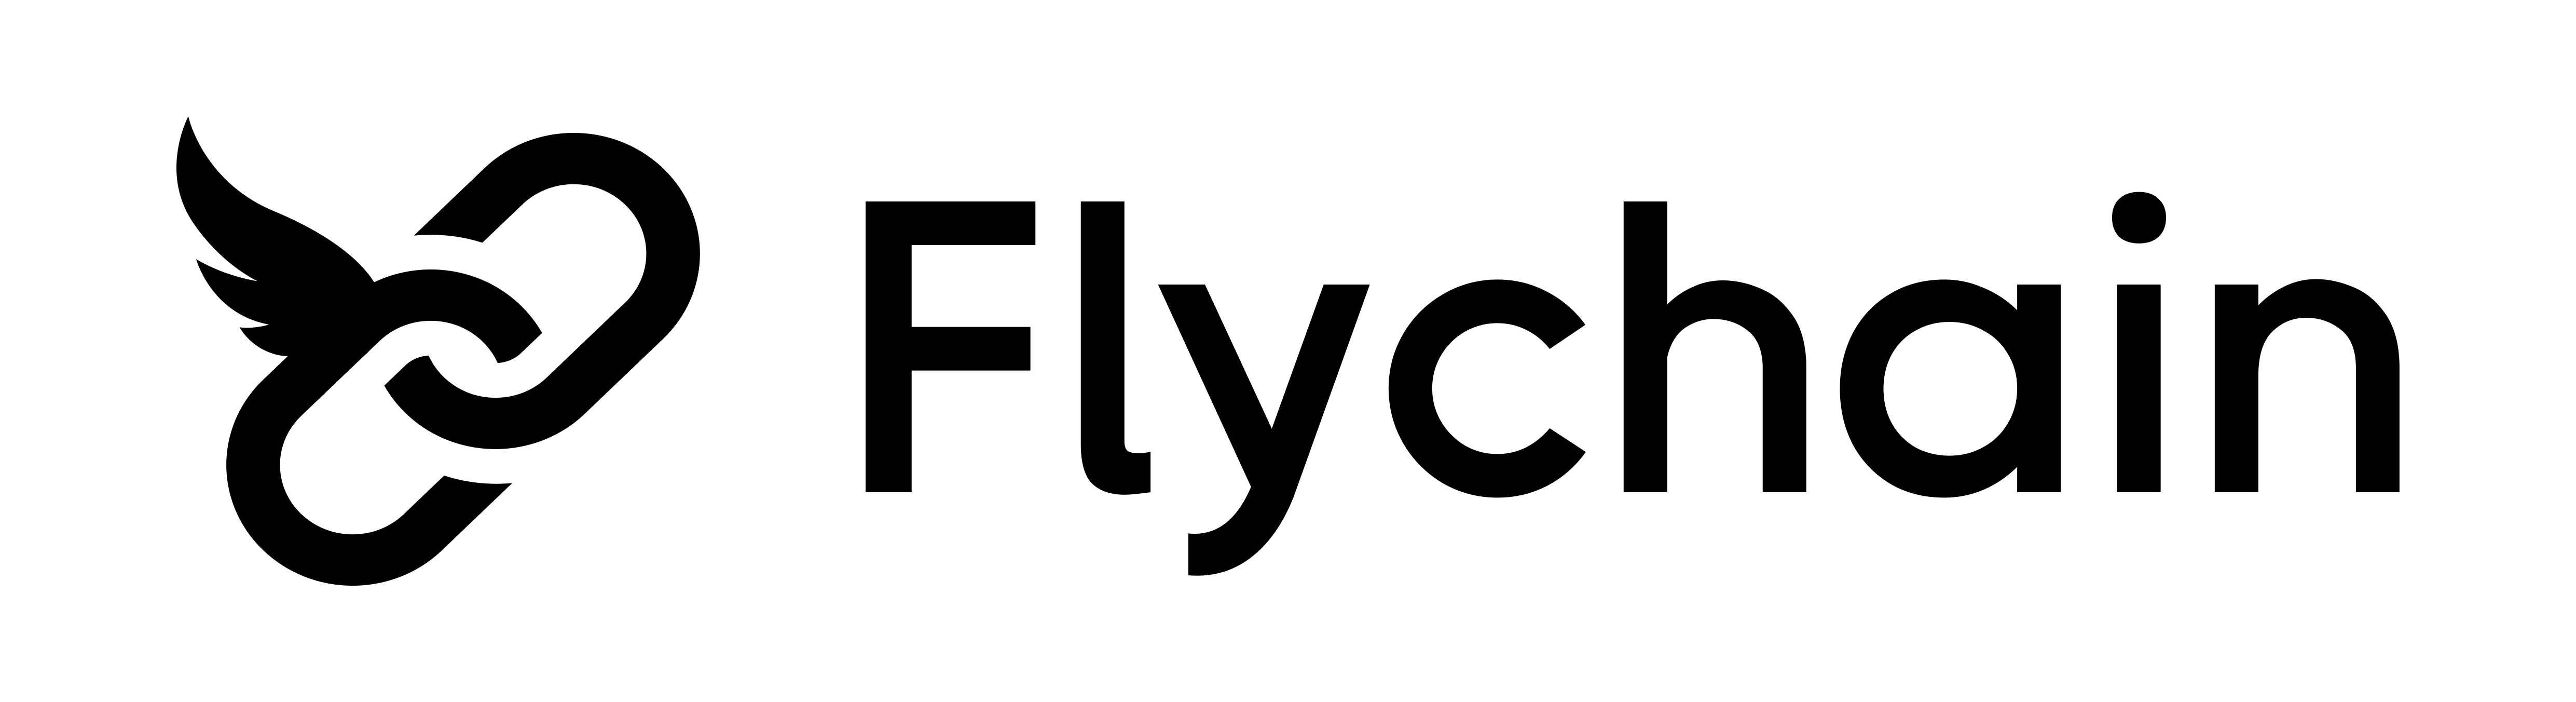 Flychain Logo Large